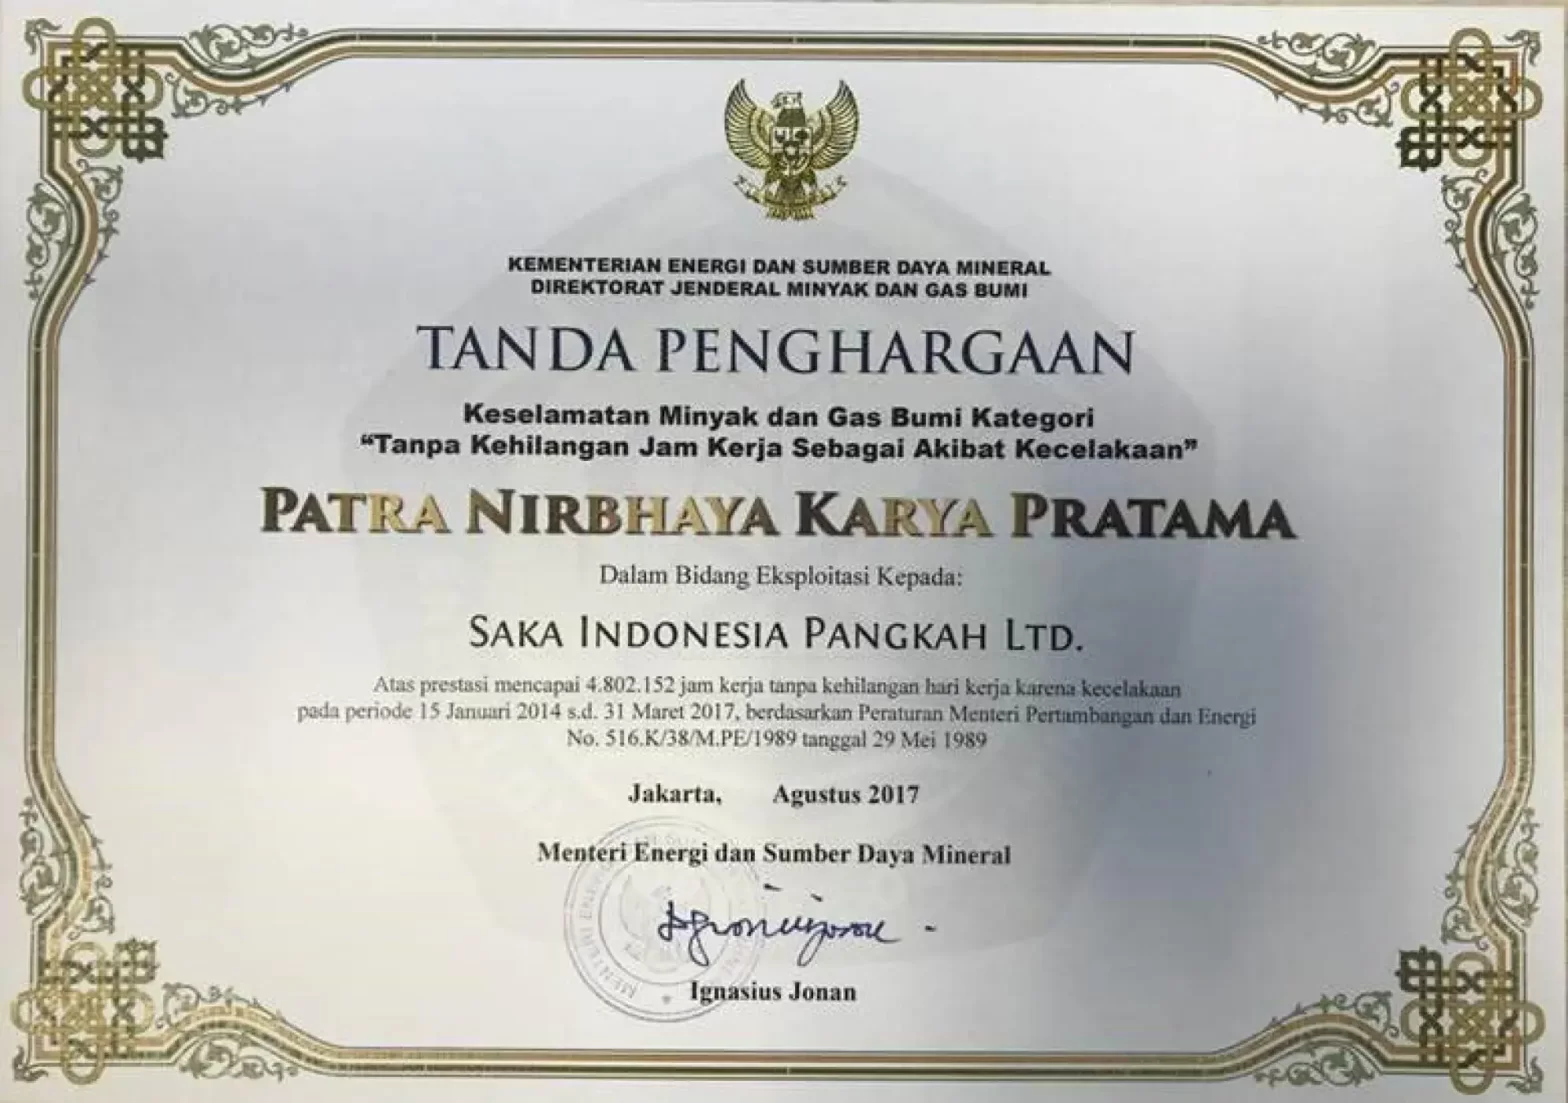 Second Patra Nirbhaya Karya Pratama Award for SAKA